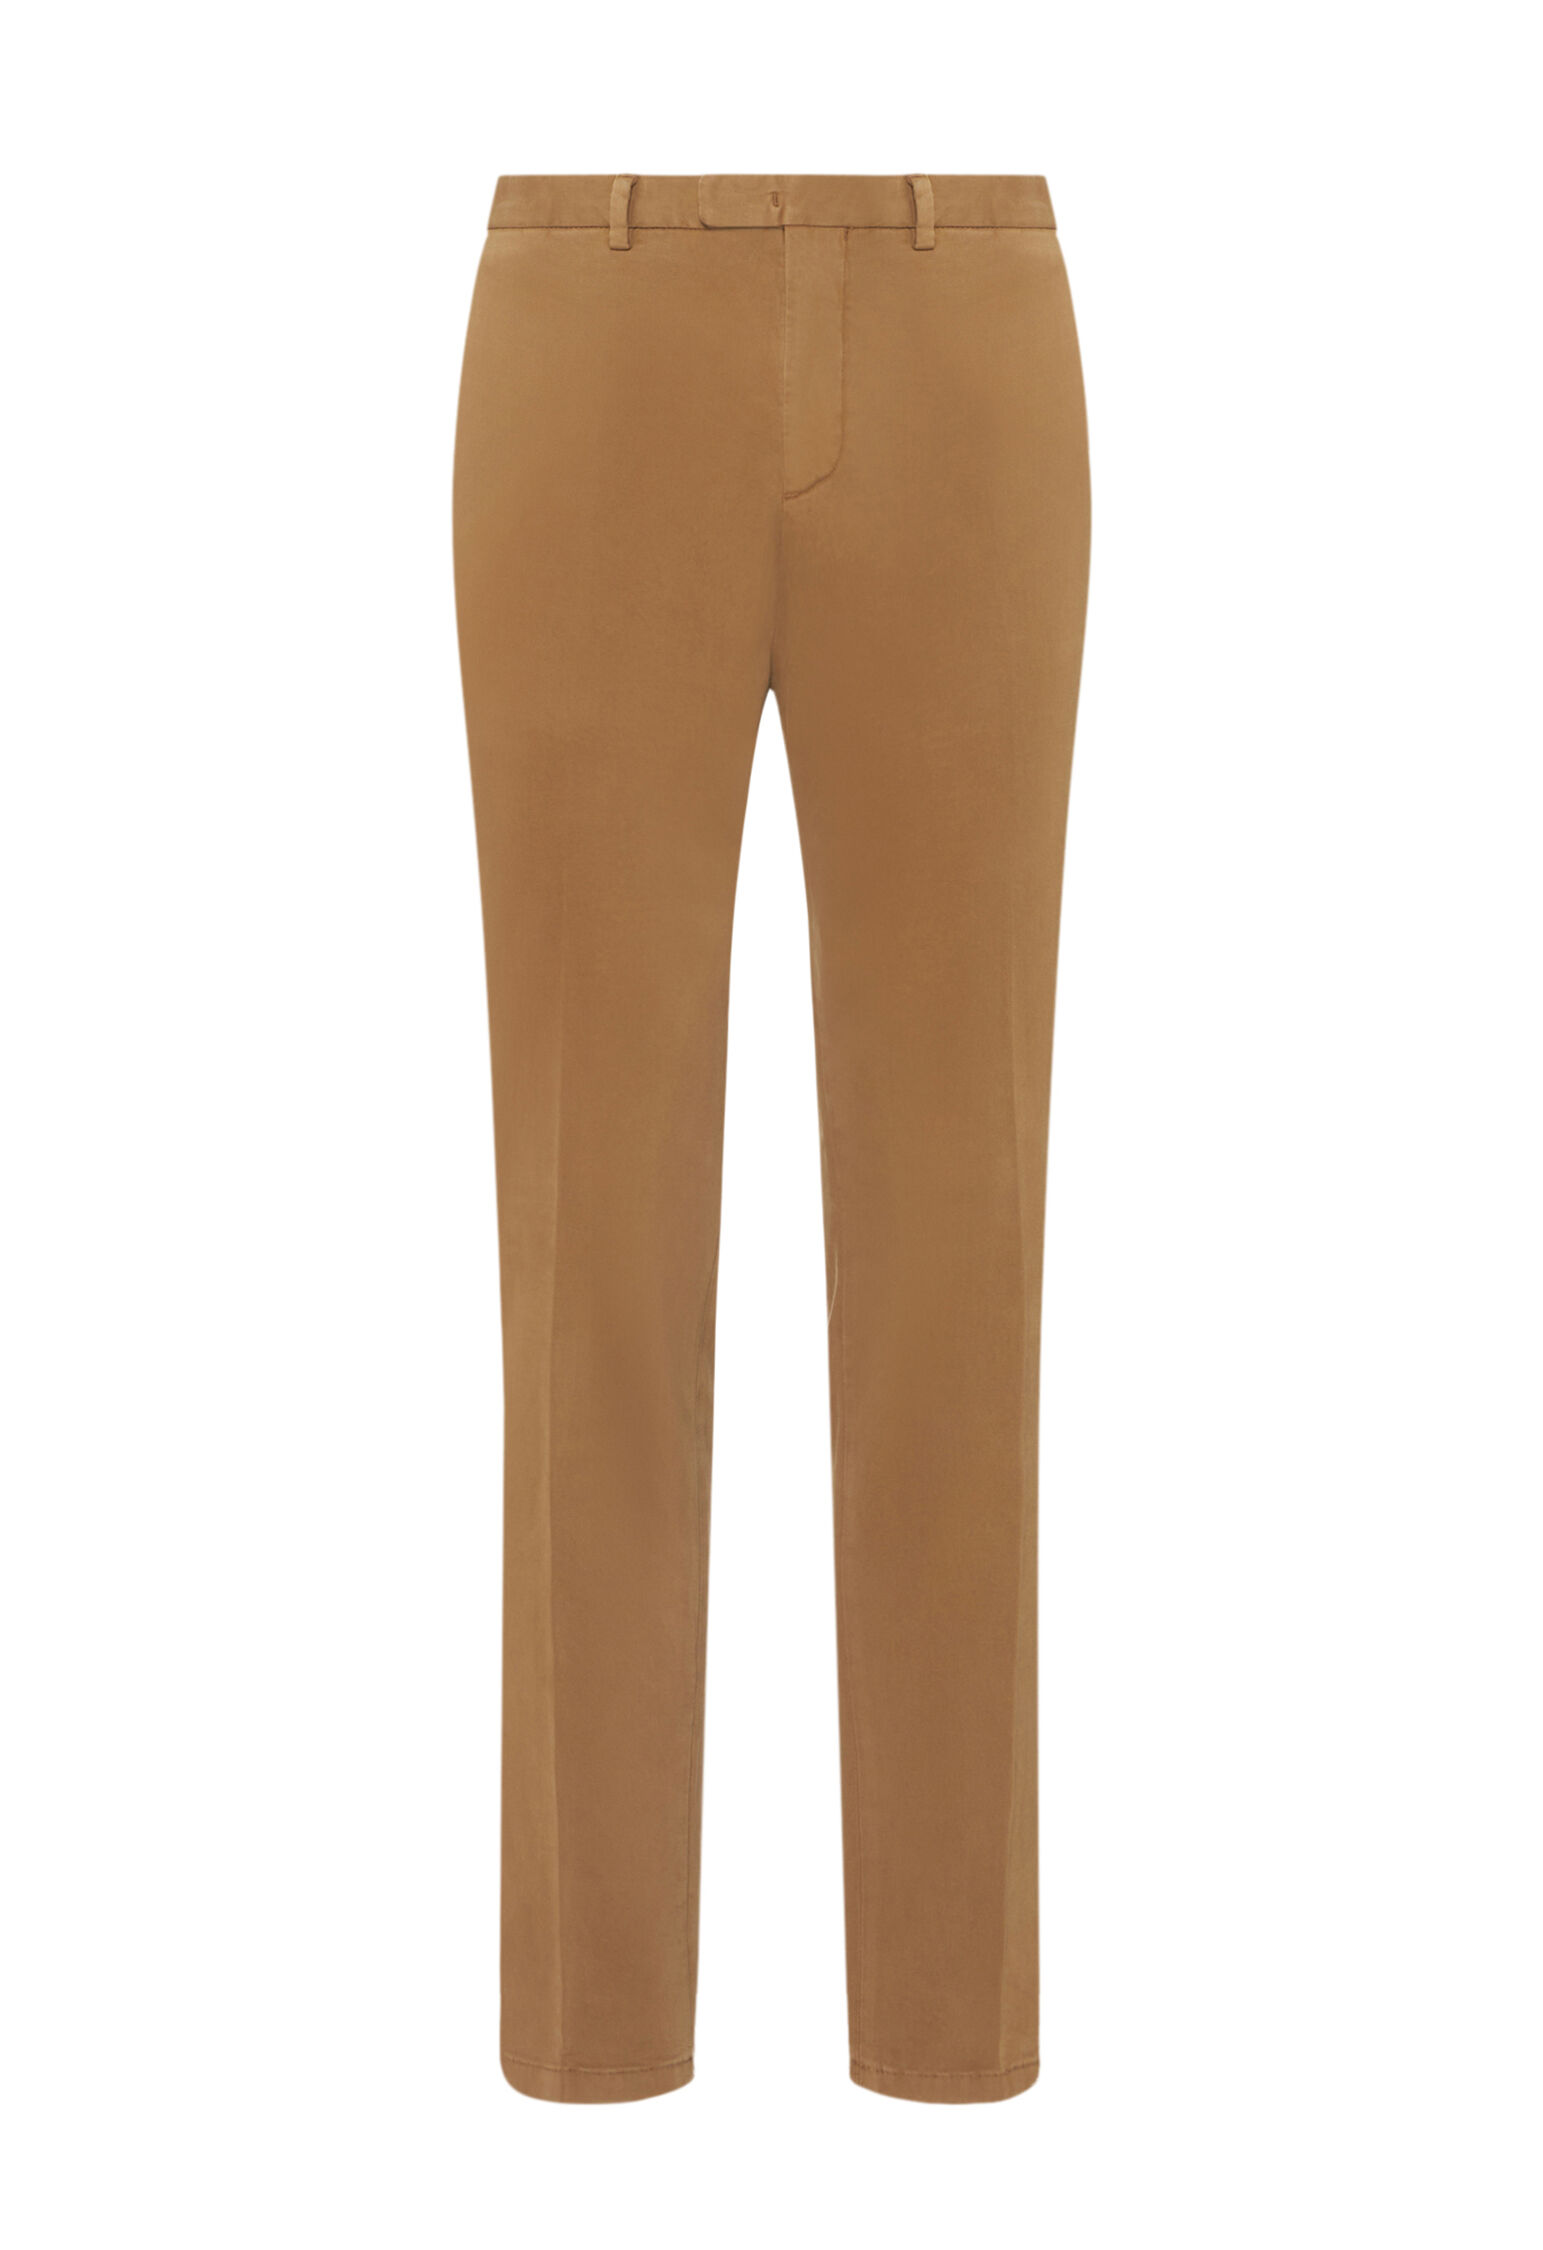 YYDGH Linen Pocket Elastic Breathable Trousers Loose Cotton Waist Pant  Womens Pants Womens Casual Dress Pants Khaki Khaki - Walmart.com